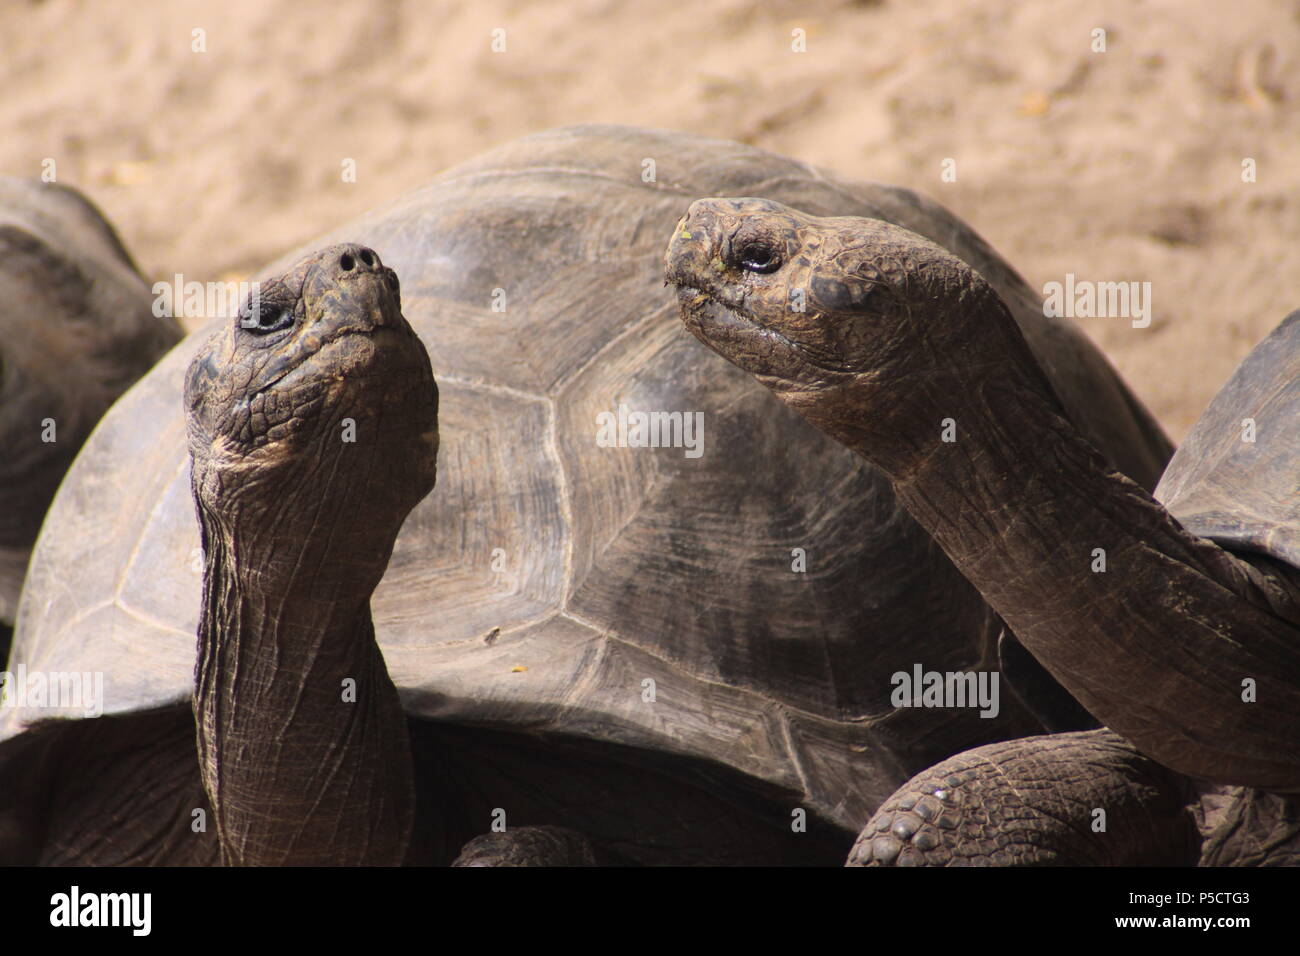 Giant Galapagos Land Turtles facing off Stock Photo